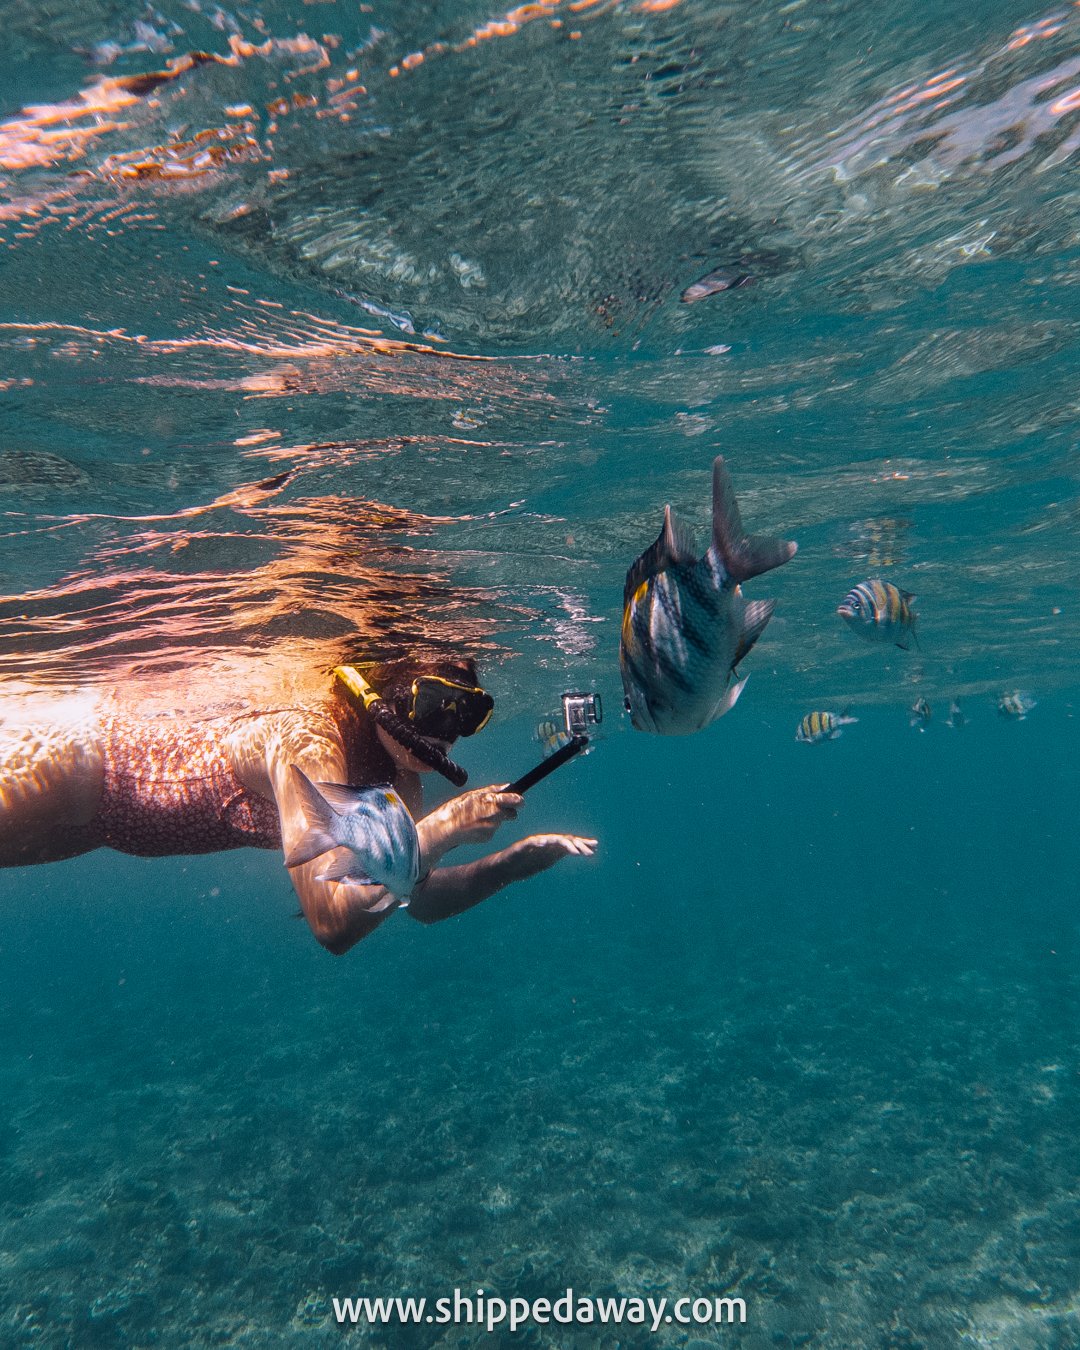 Arijana Tkalcec snorkeling with fish, Similan Islands